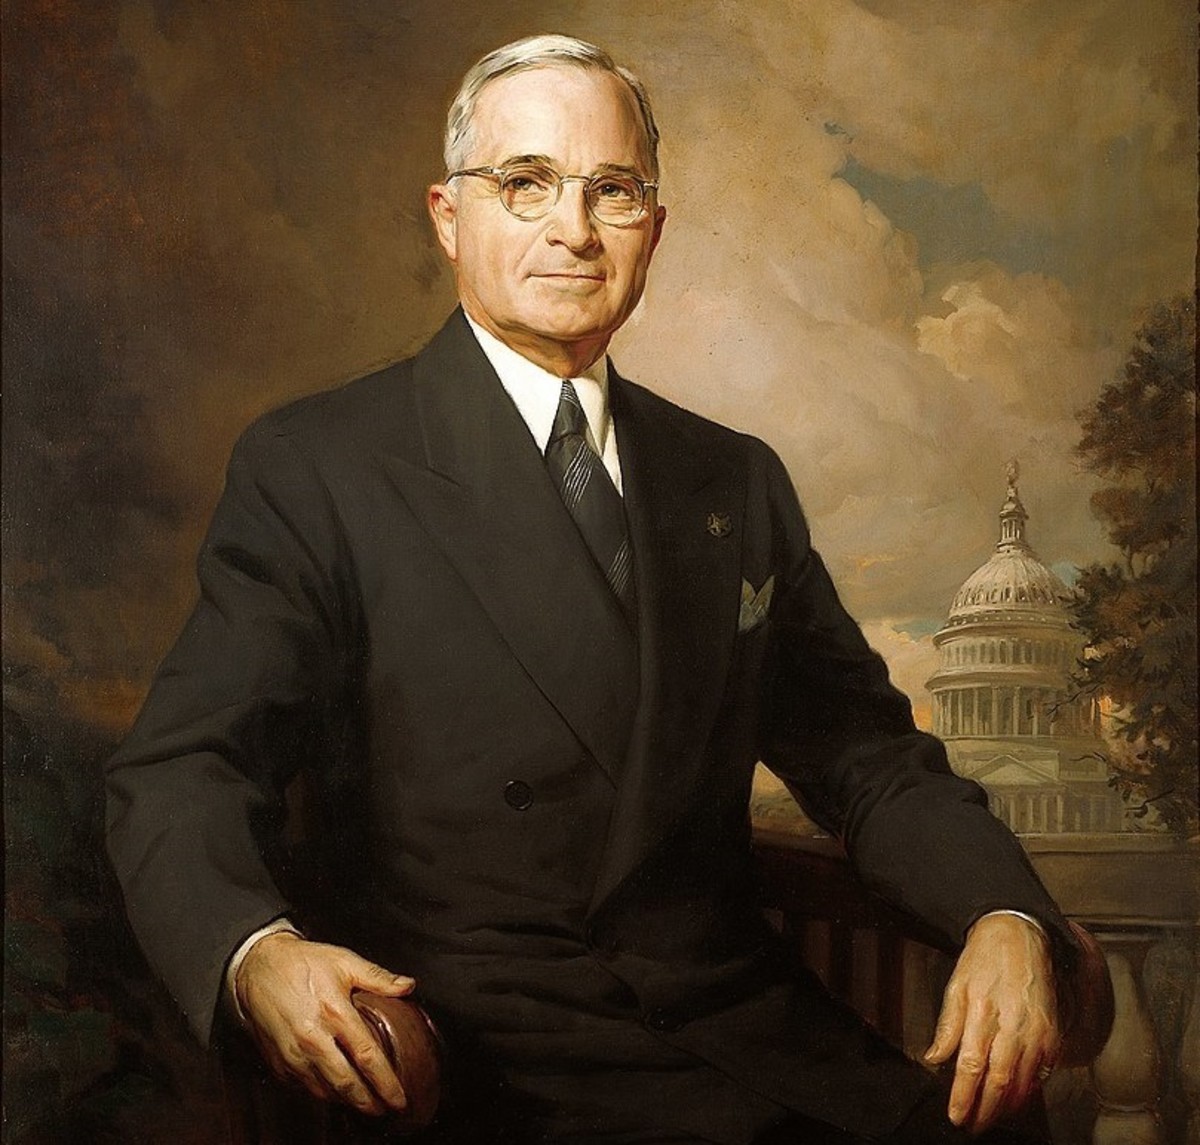 An official portrait of Harry Truman (1945).